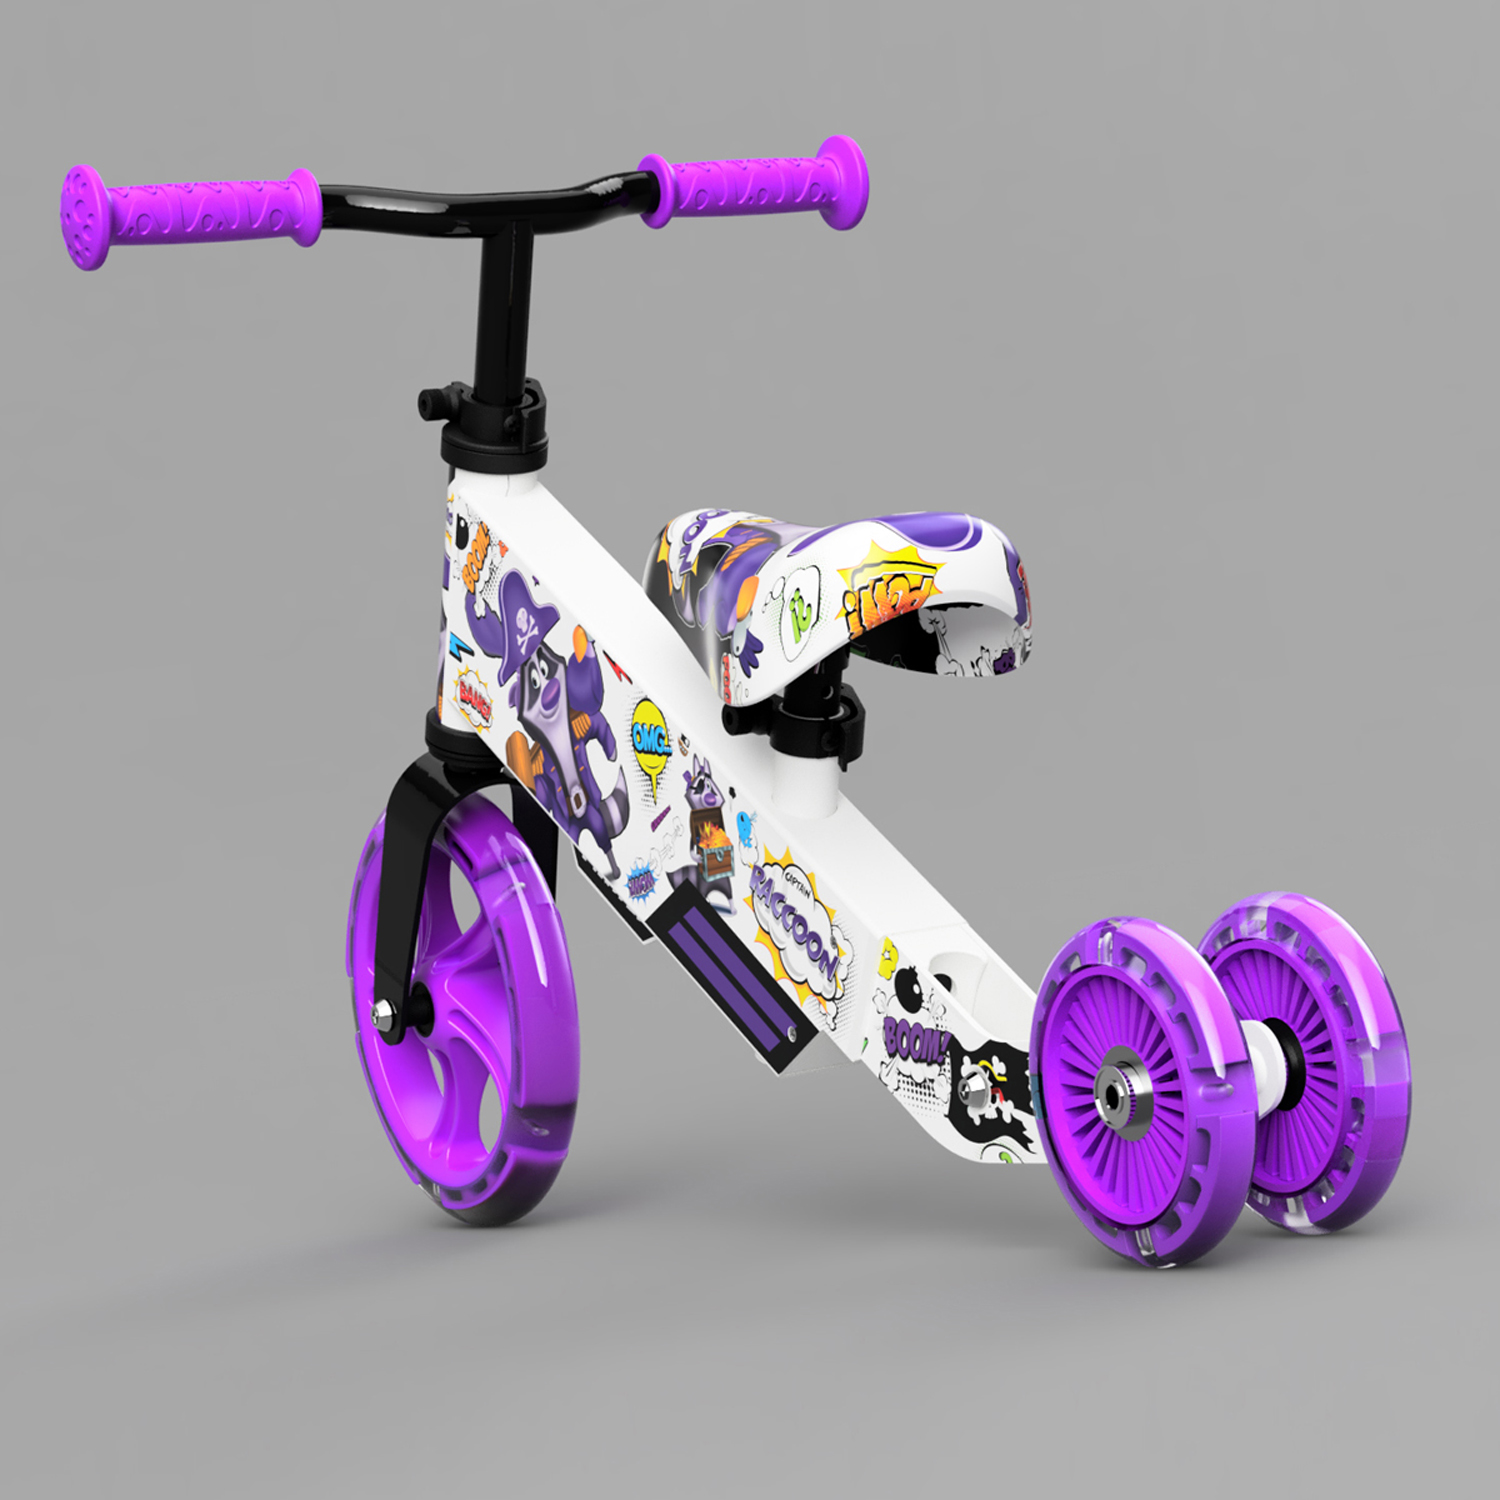 Беговел Small Rider для малышей Turbo Bike фиолетовый - фото 9